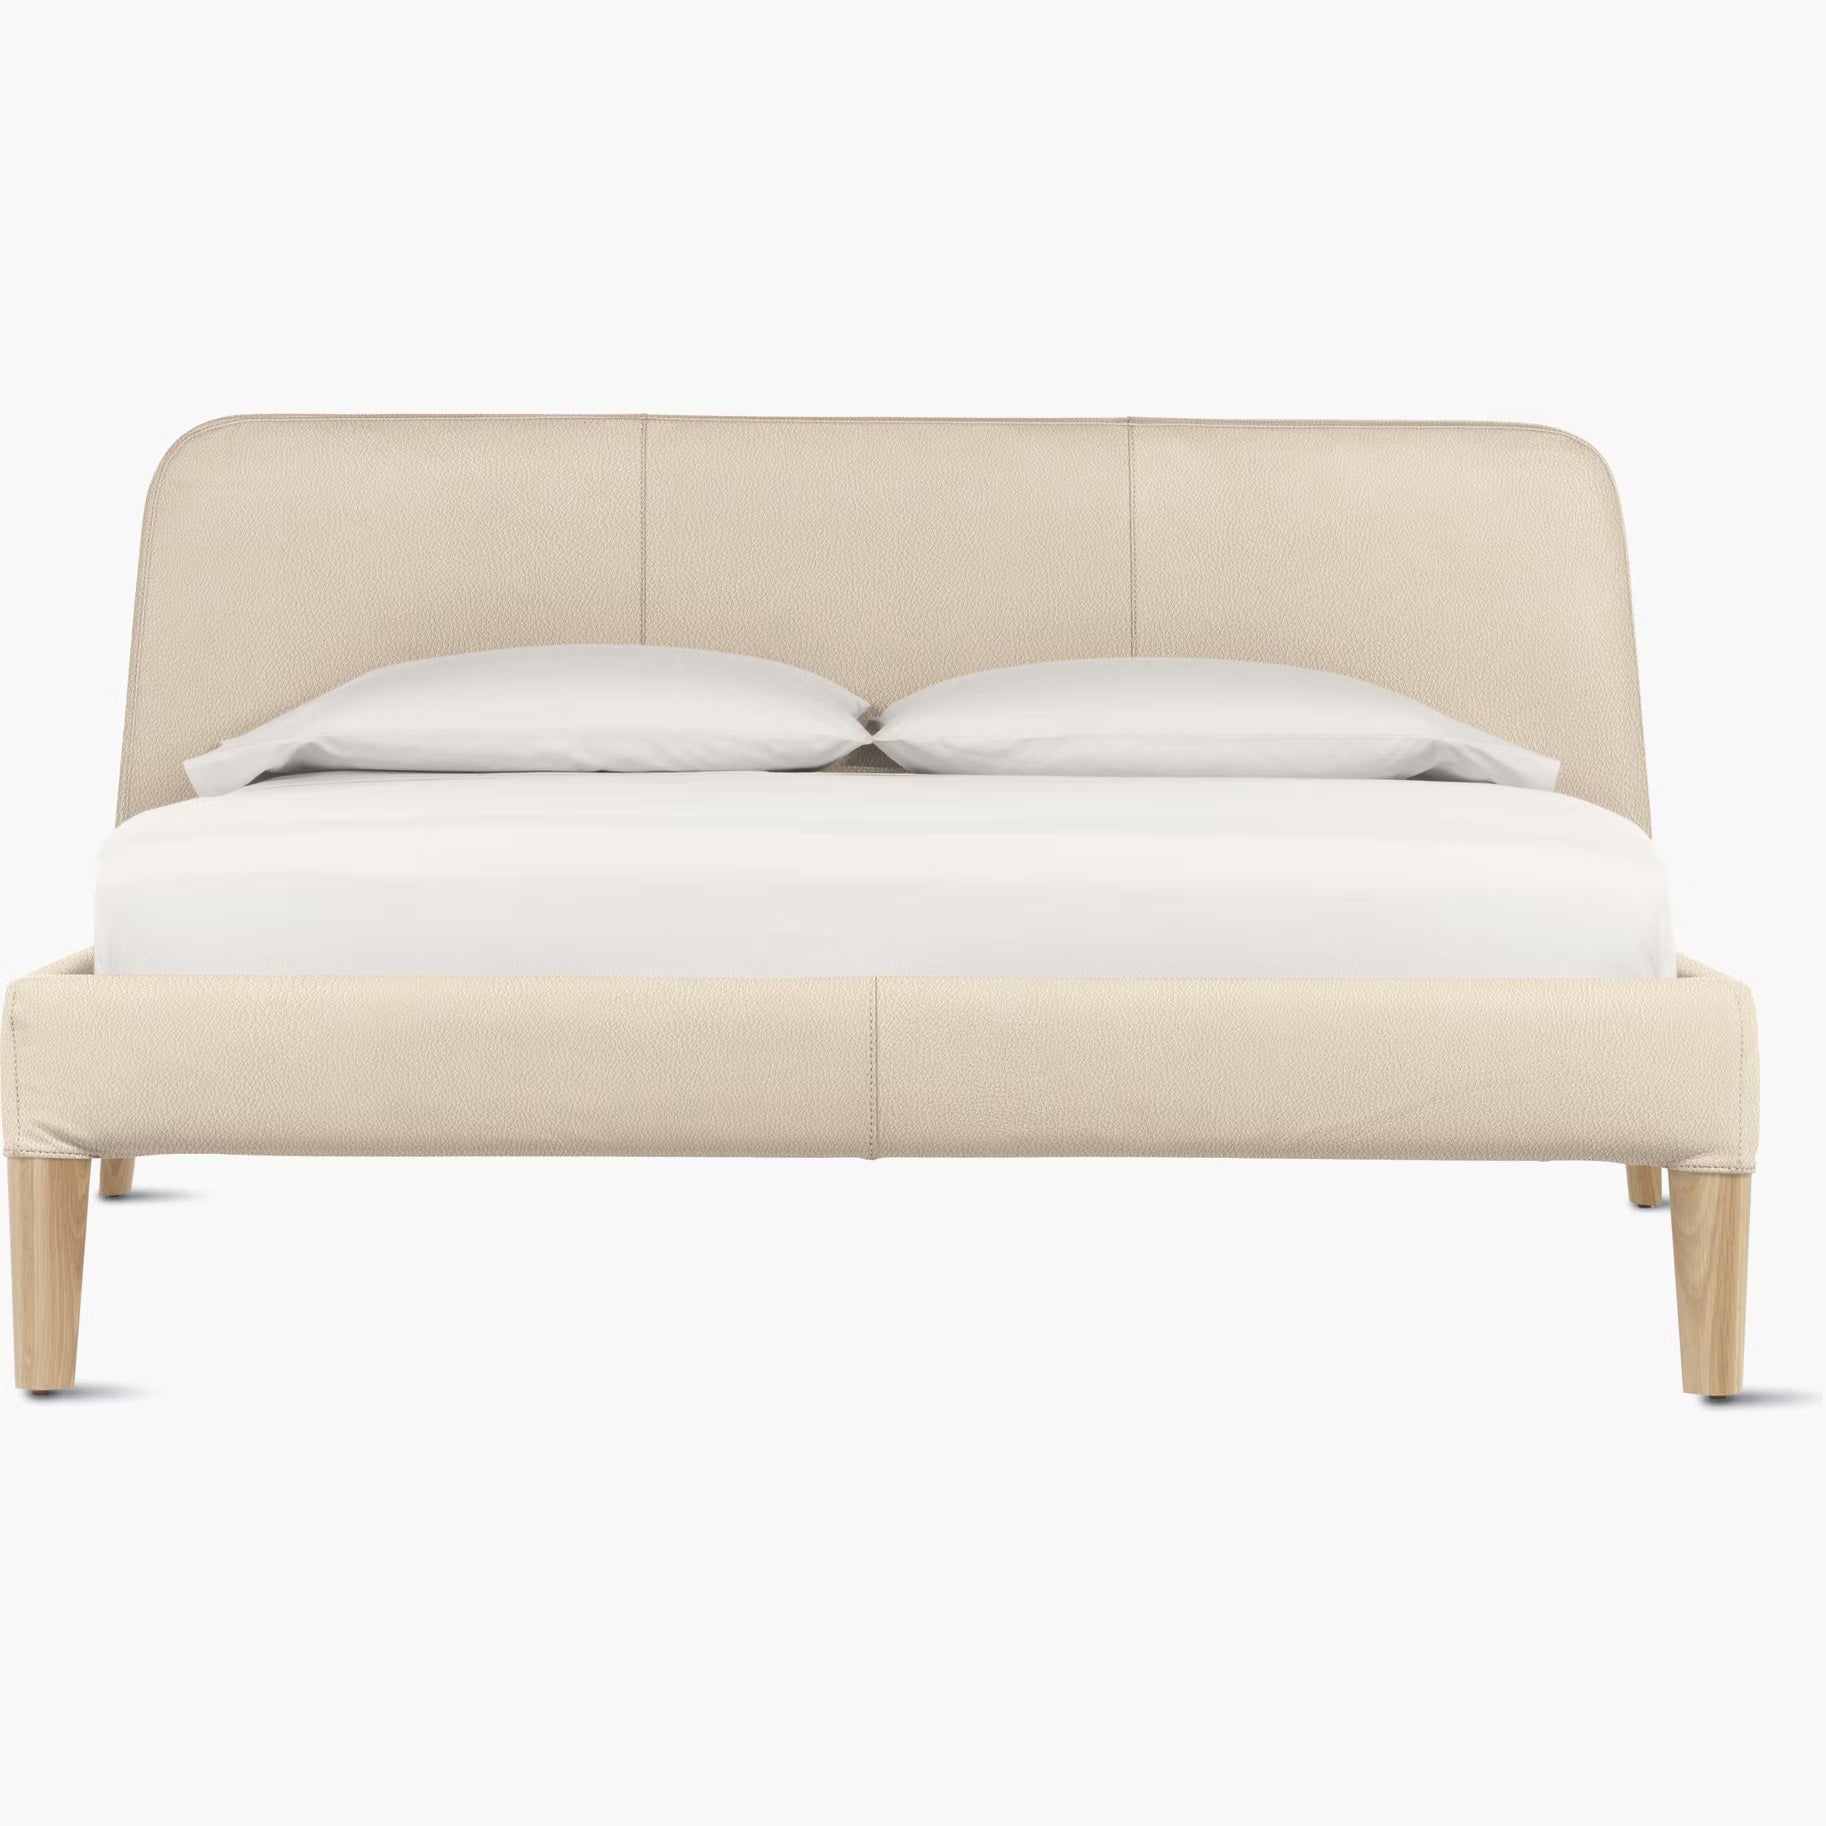 Upholstered Beds Dwr 1